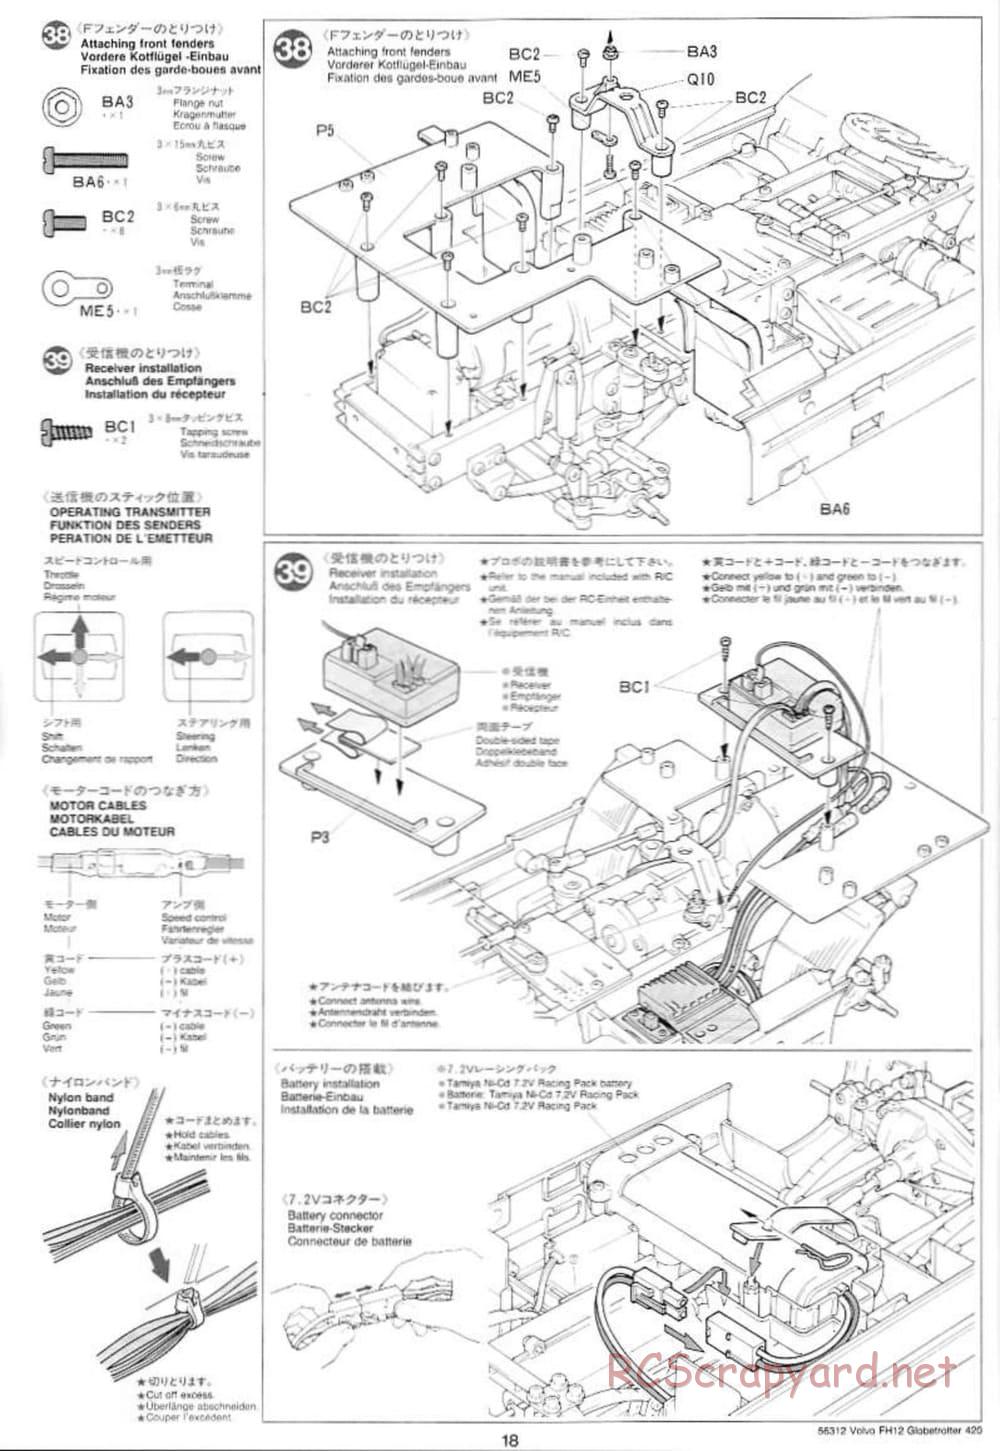 Tamiya - Volvo FH12 Globetrotter 420 - Manual - Page 18